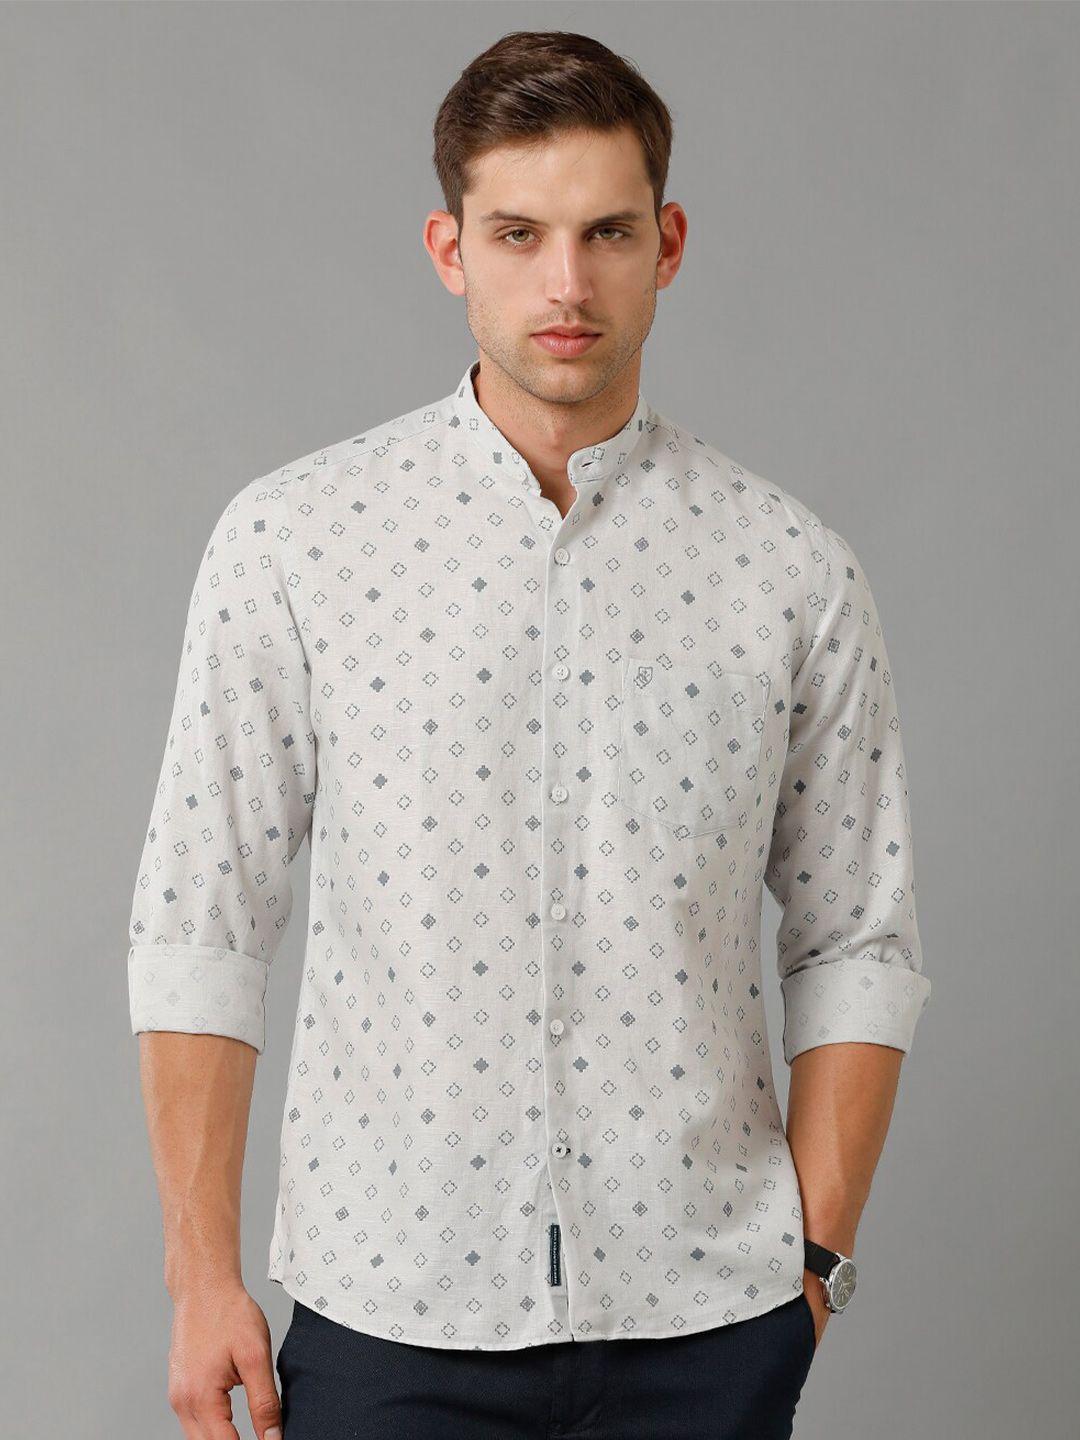 linen club contemporary opaque geometric printed linen casual shirt